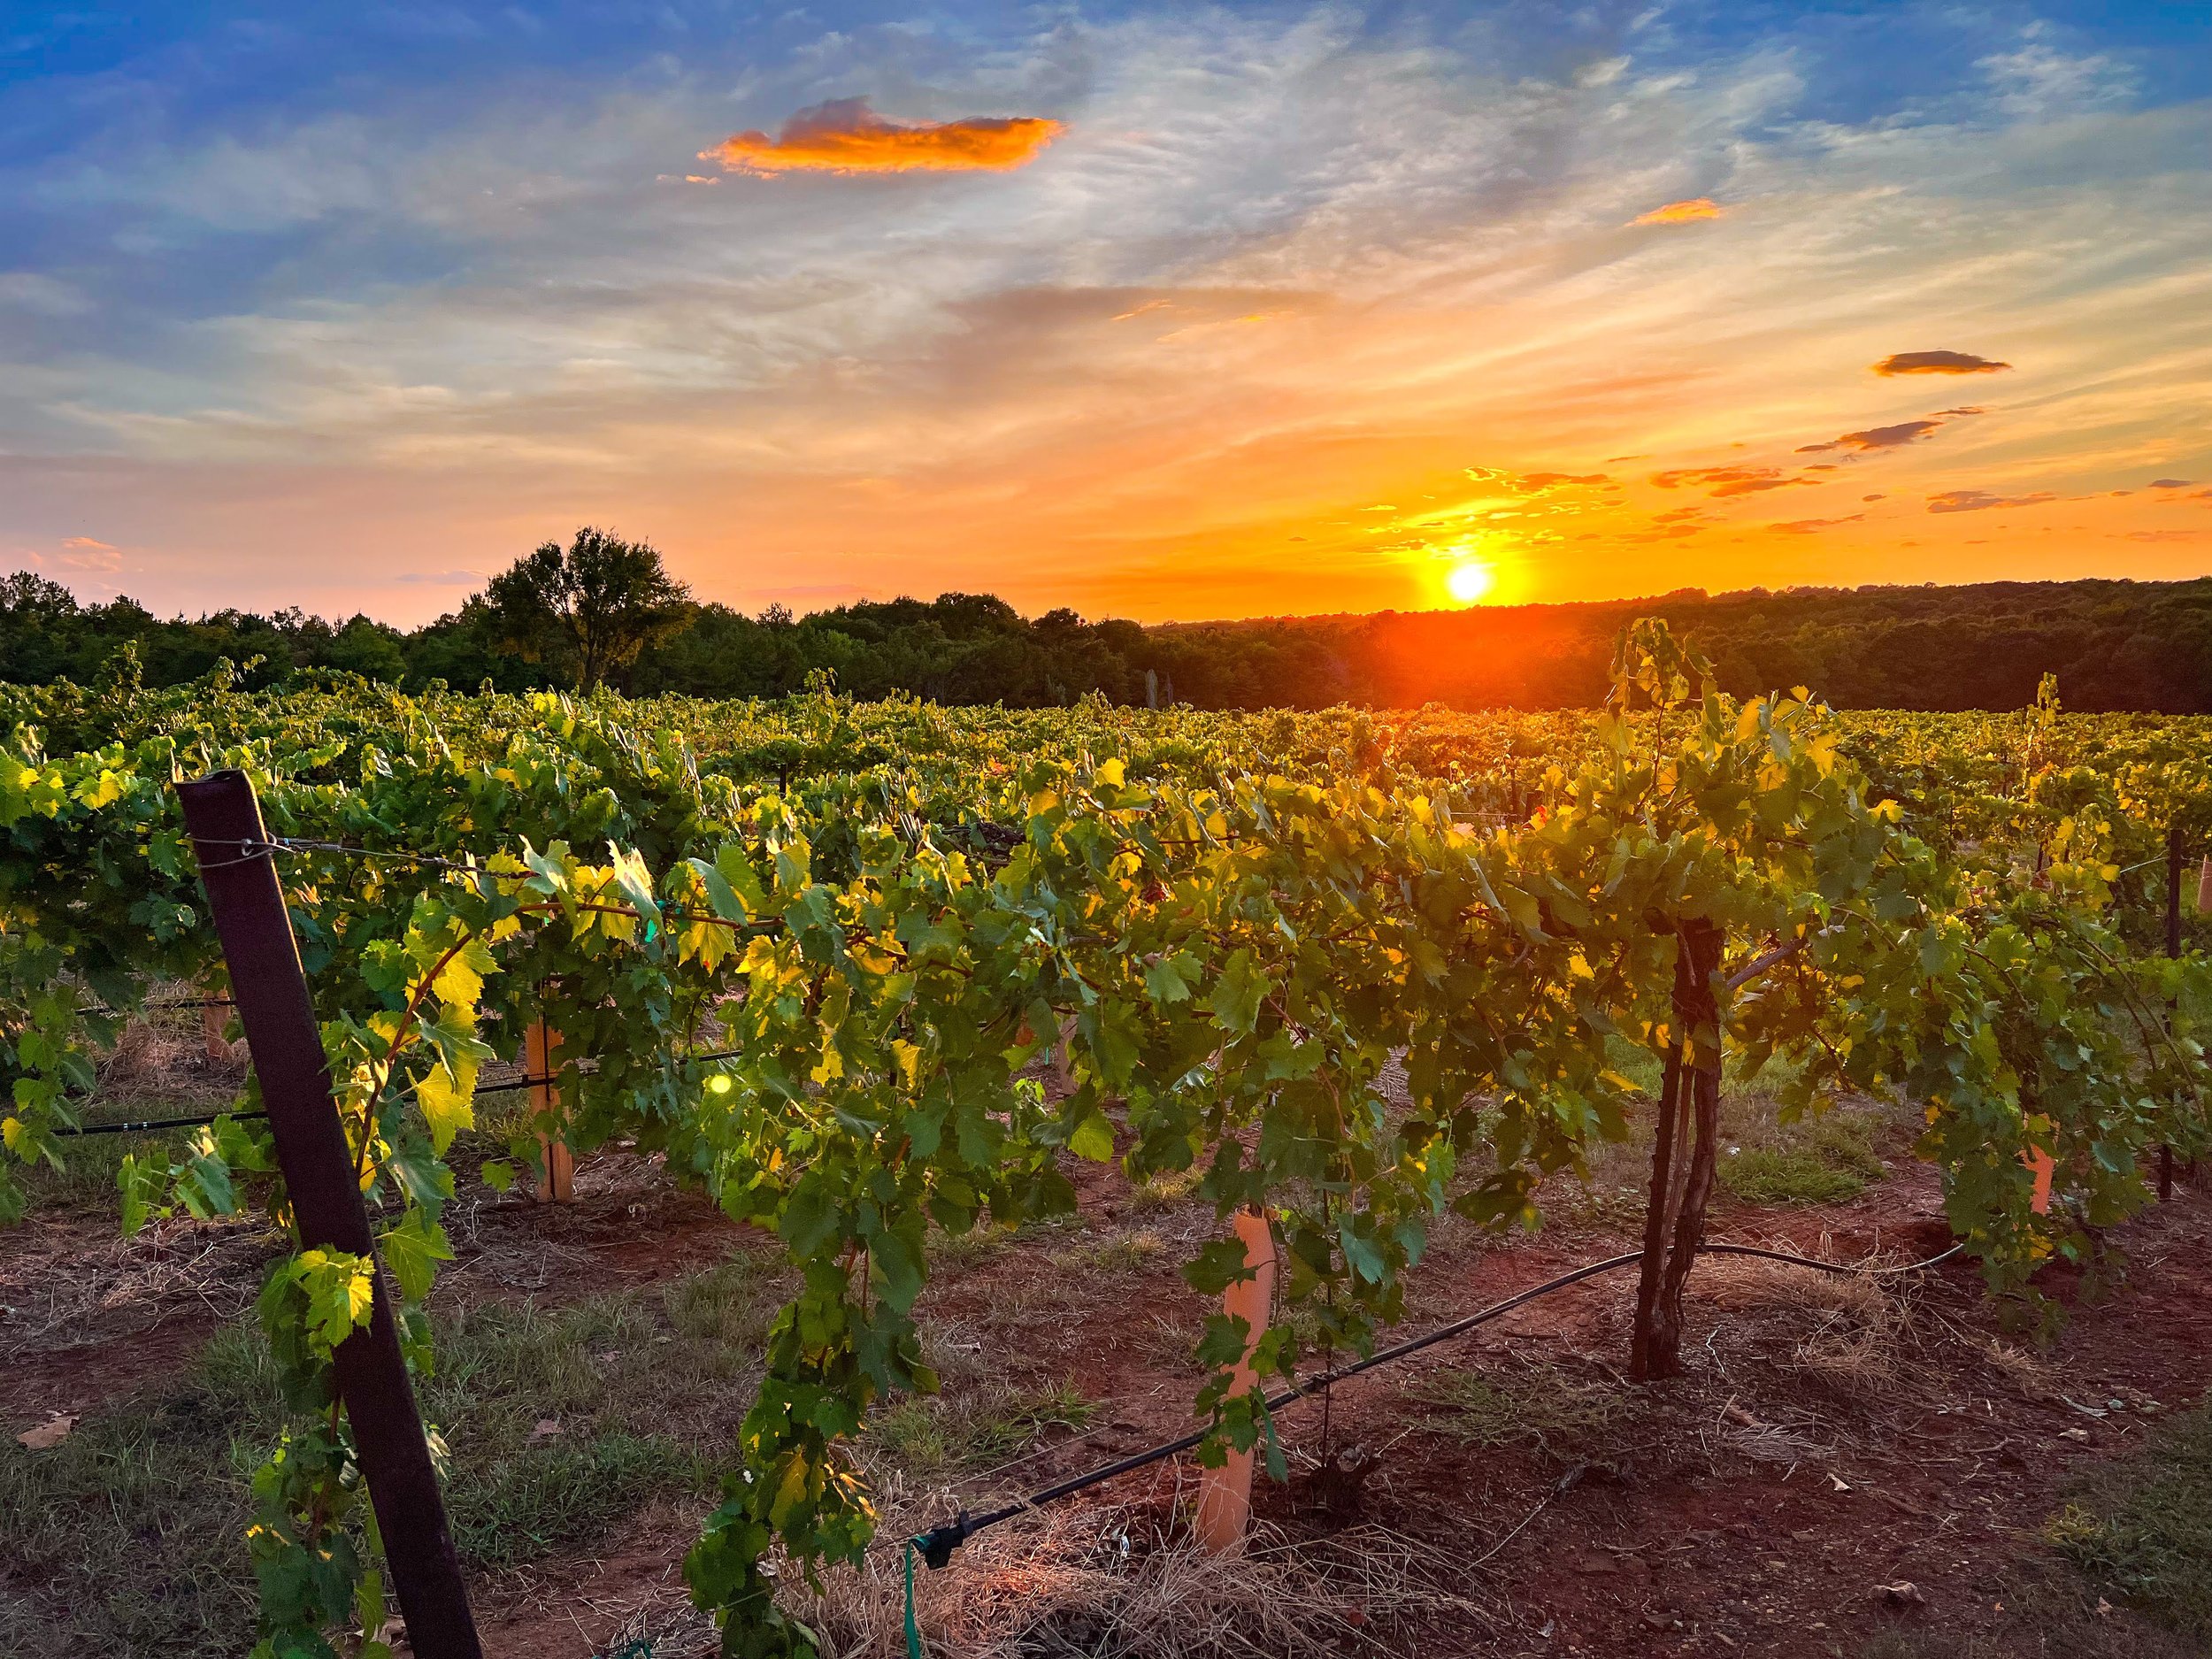 summer sunset over vines at kiepersol-7265.jpg